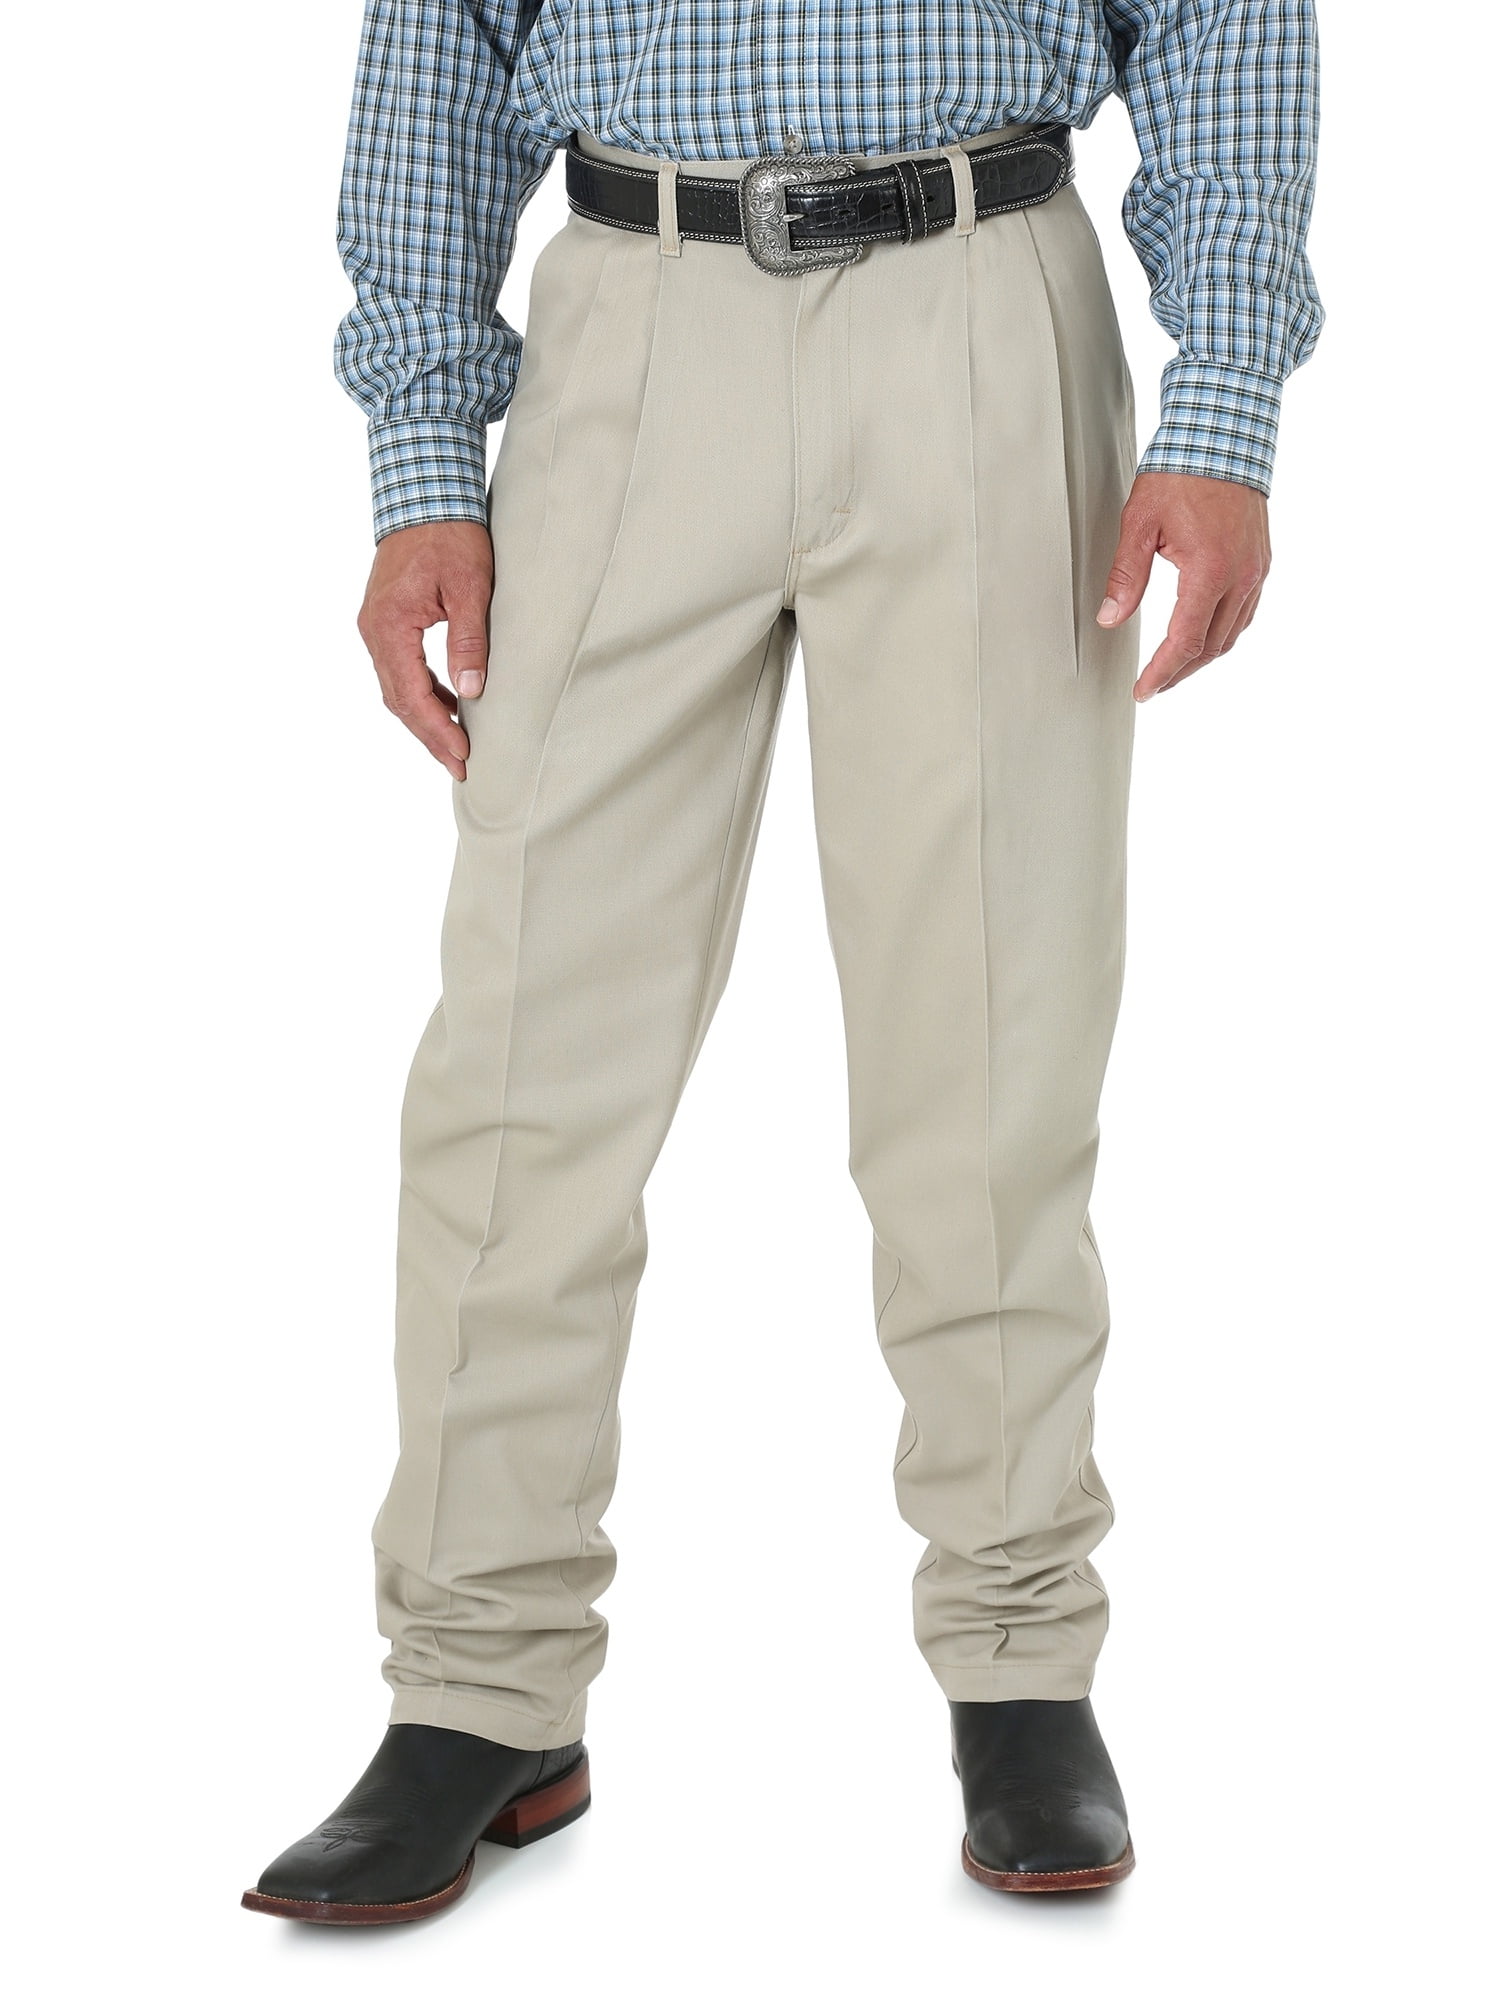 wrangler mens riata pleated relaxed fit casual pant, khaki, 28x30 -  